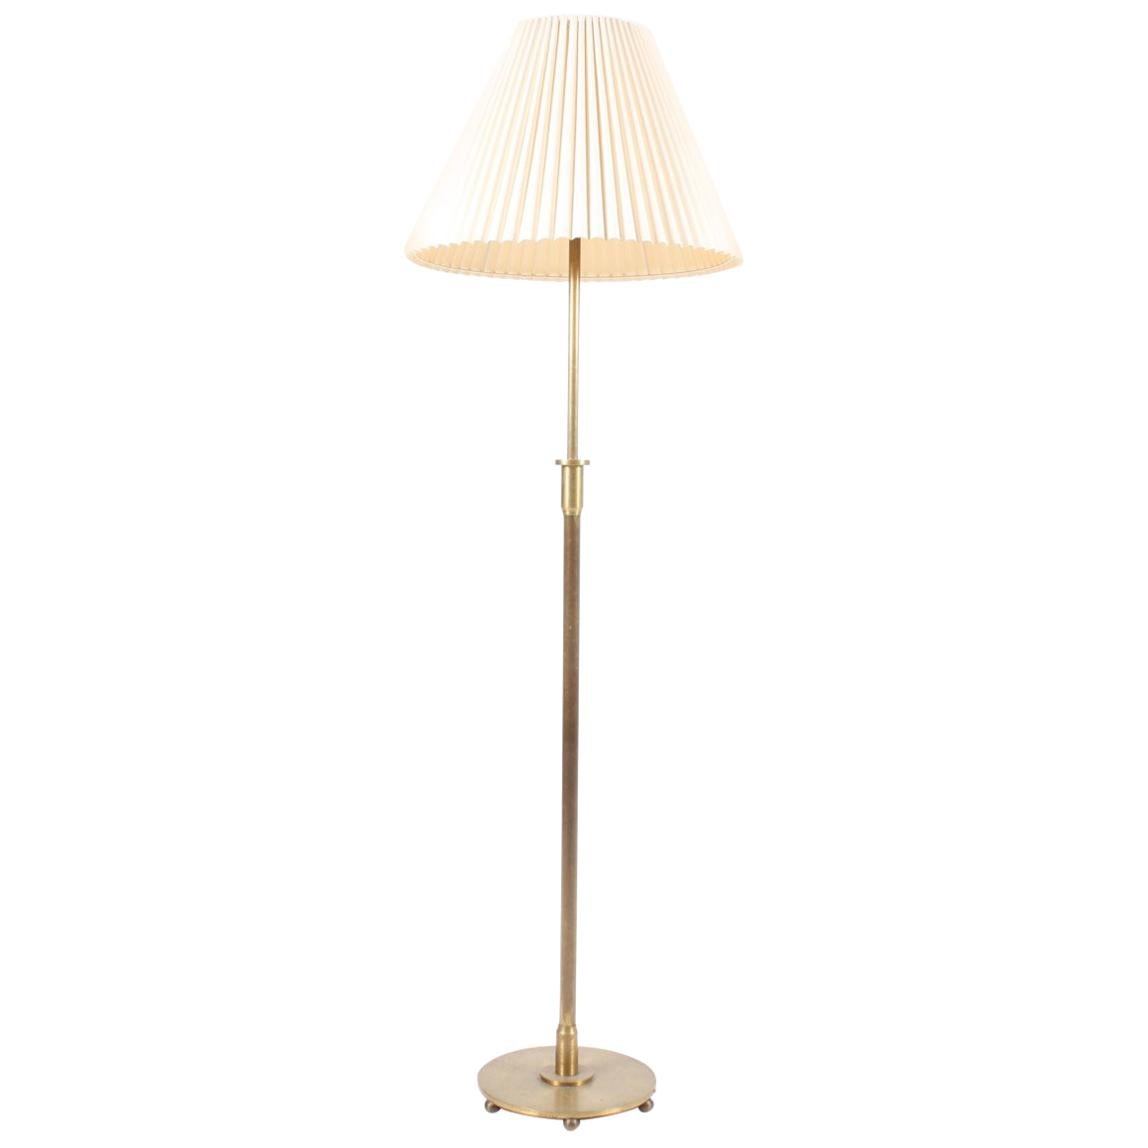 Danish Brass Floor Lamp from the 1940s